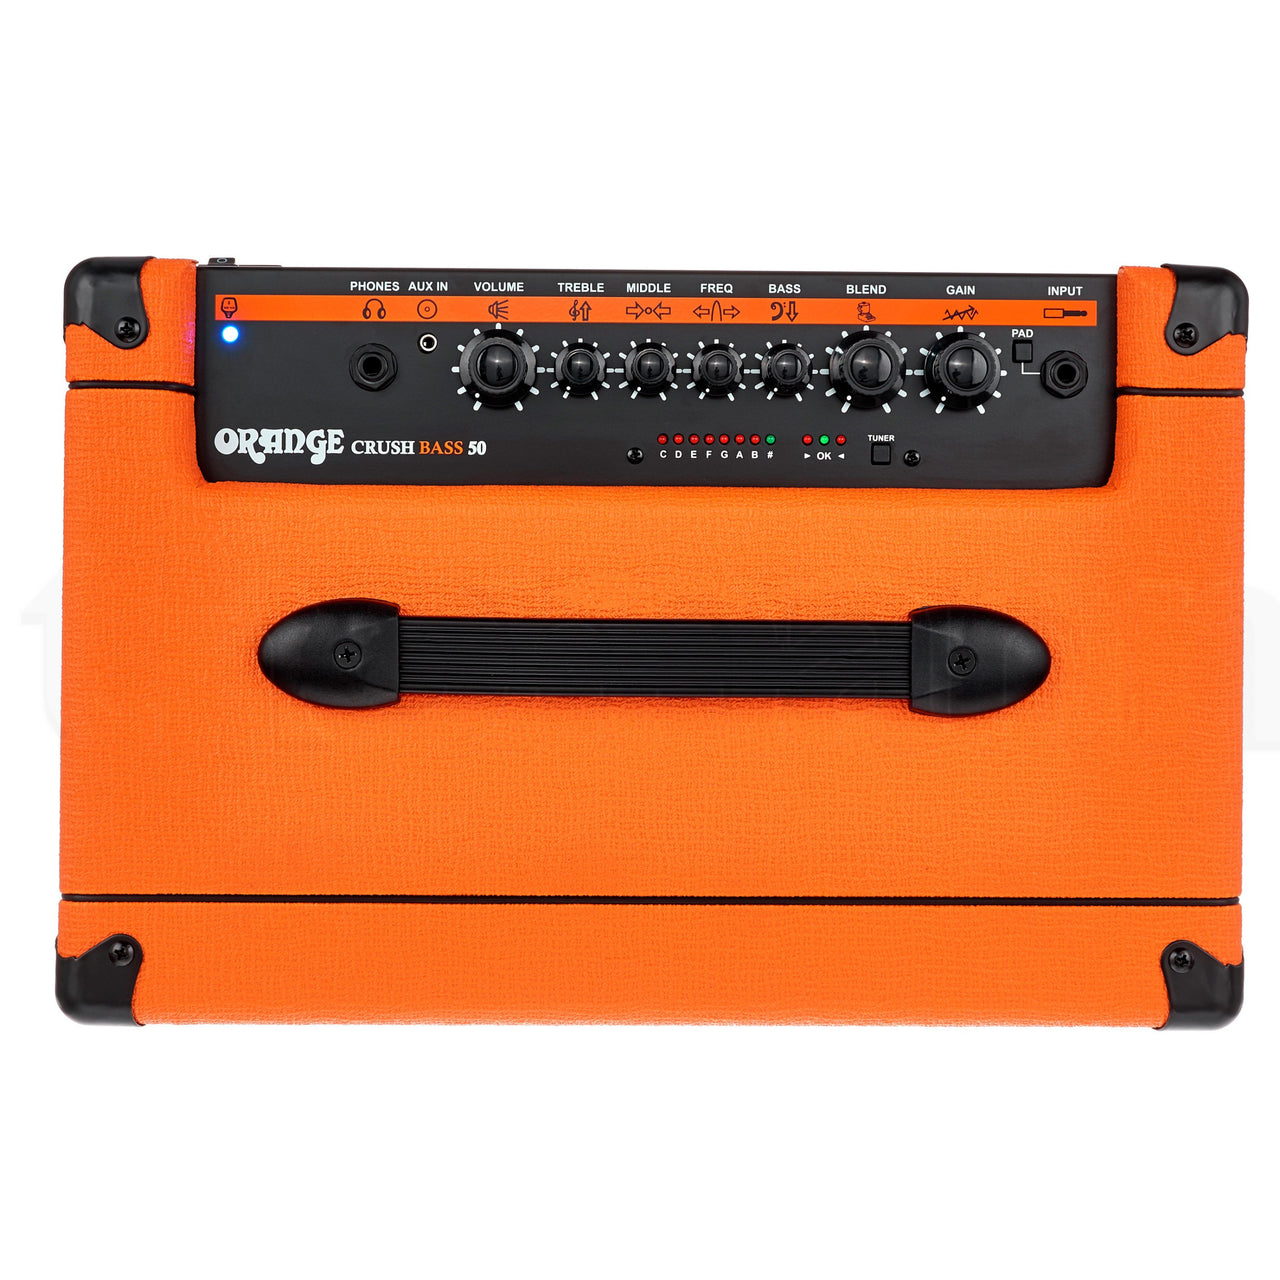 Amplificador Orange Cr50bxt Para Bajo Electrico 1x12 Crush Bass 50w